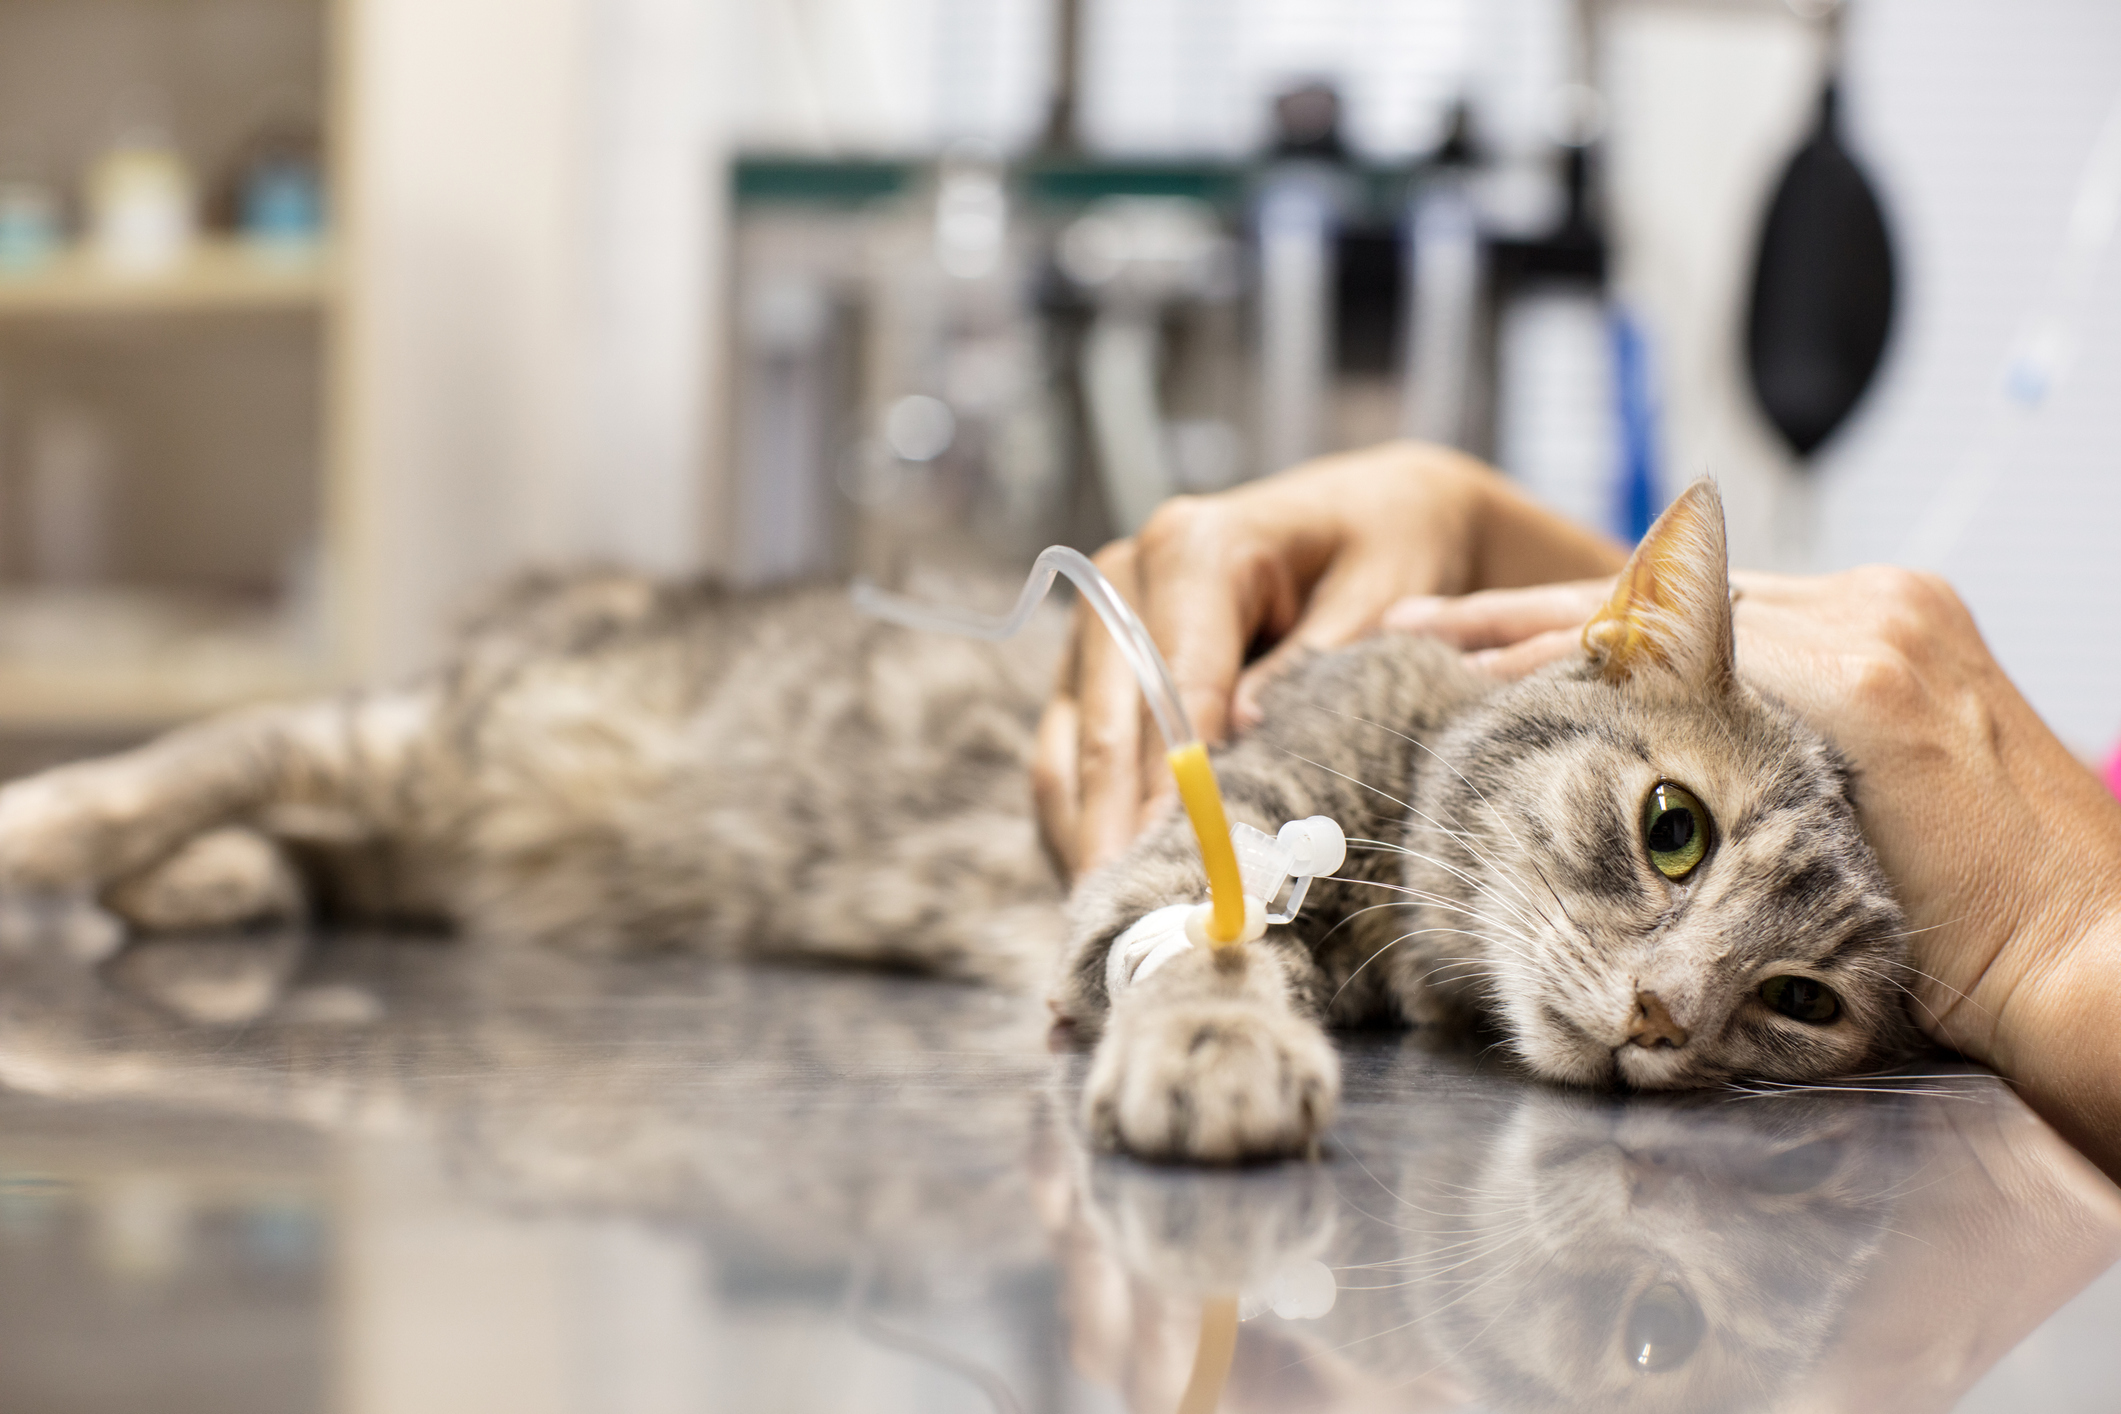 Sick cat gets intravenous treatment at the veterinarian